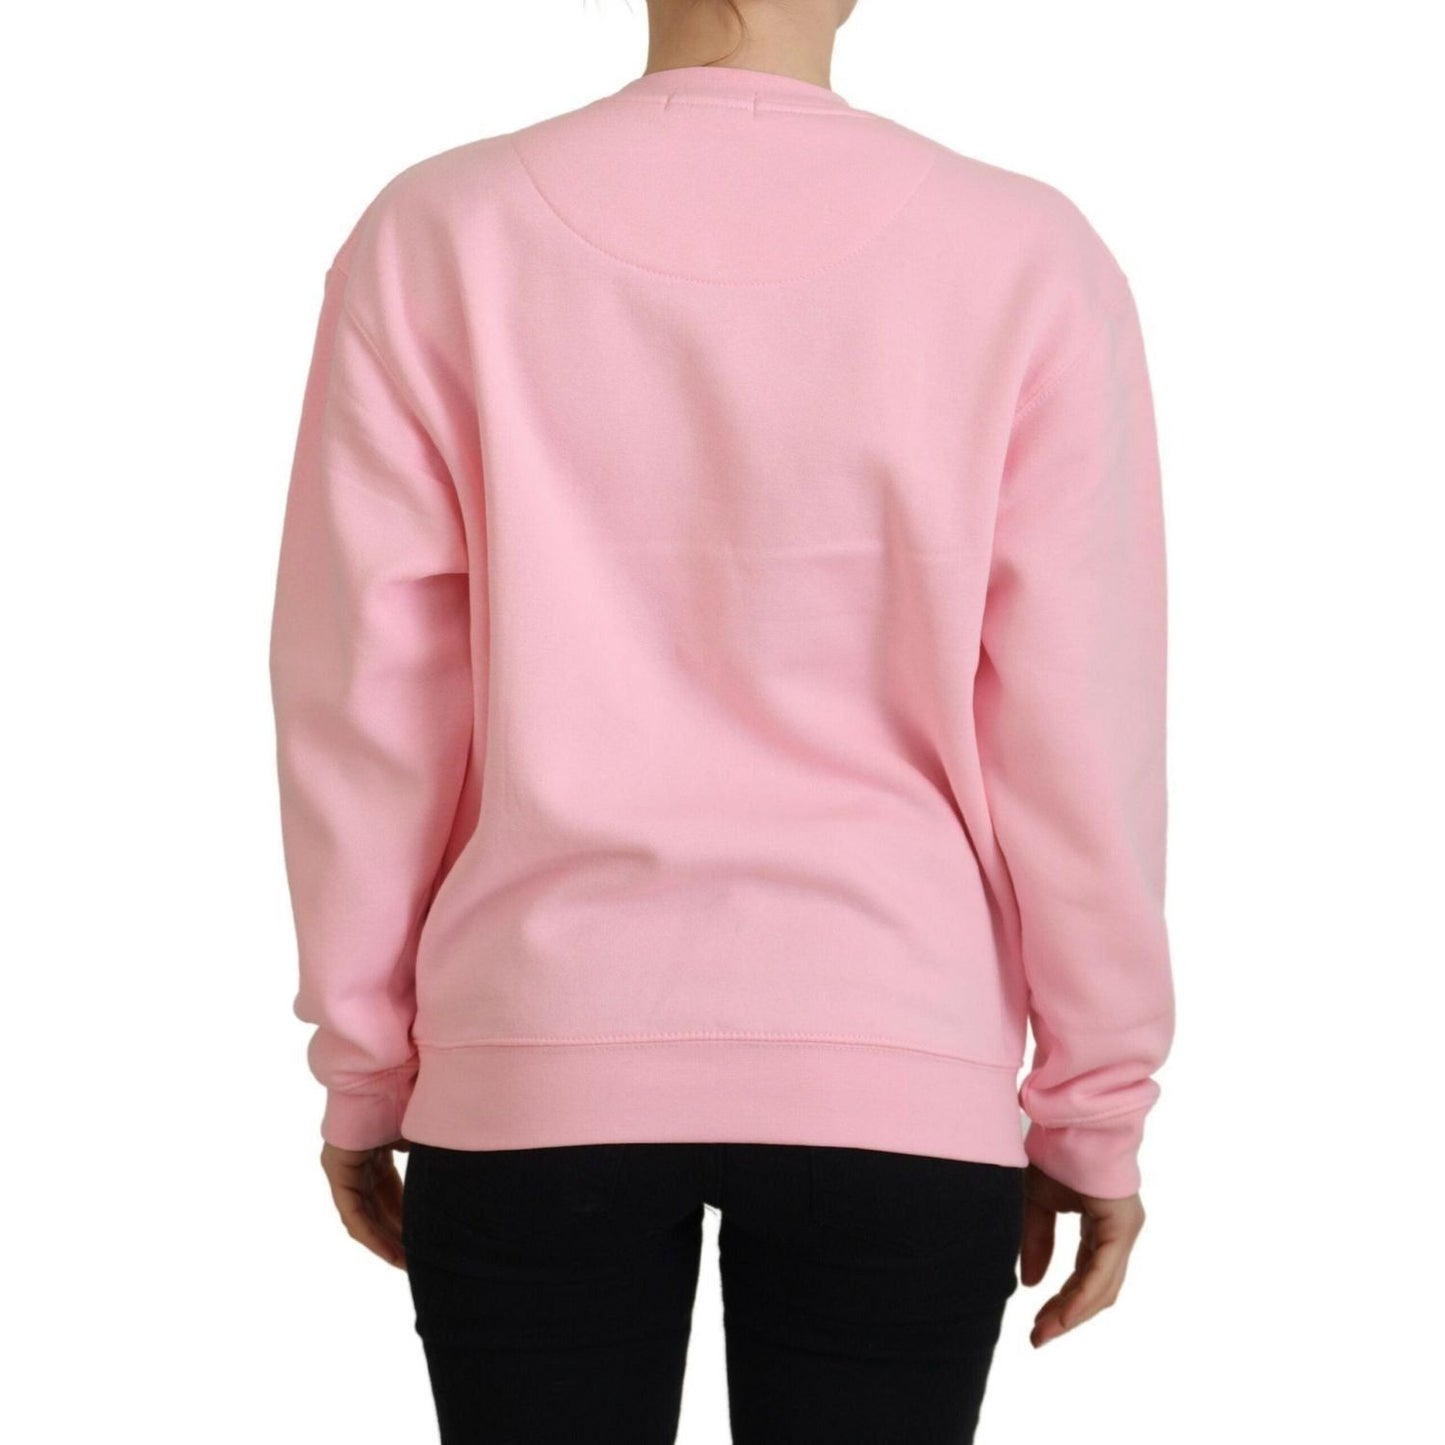 Philippe Model Elegant Pink Long Sleeve Pullover Sweater pink-printed-long-sleeves-pullover-sweater IMG_9291-1-scaled-d1110701-8ac.jpg